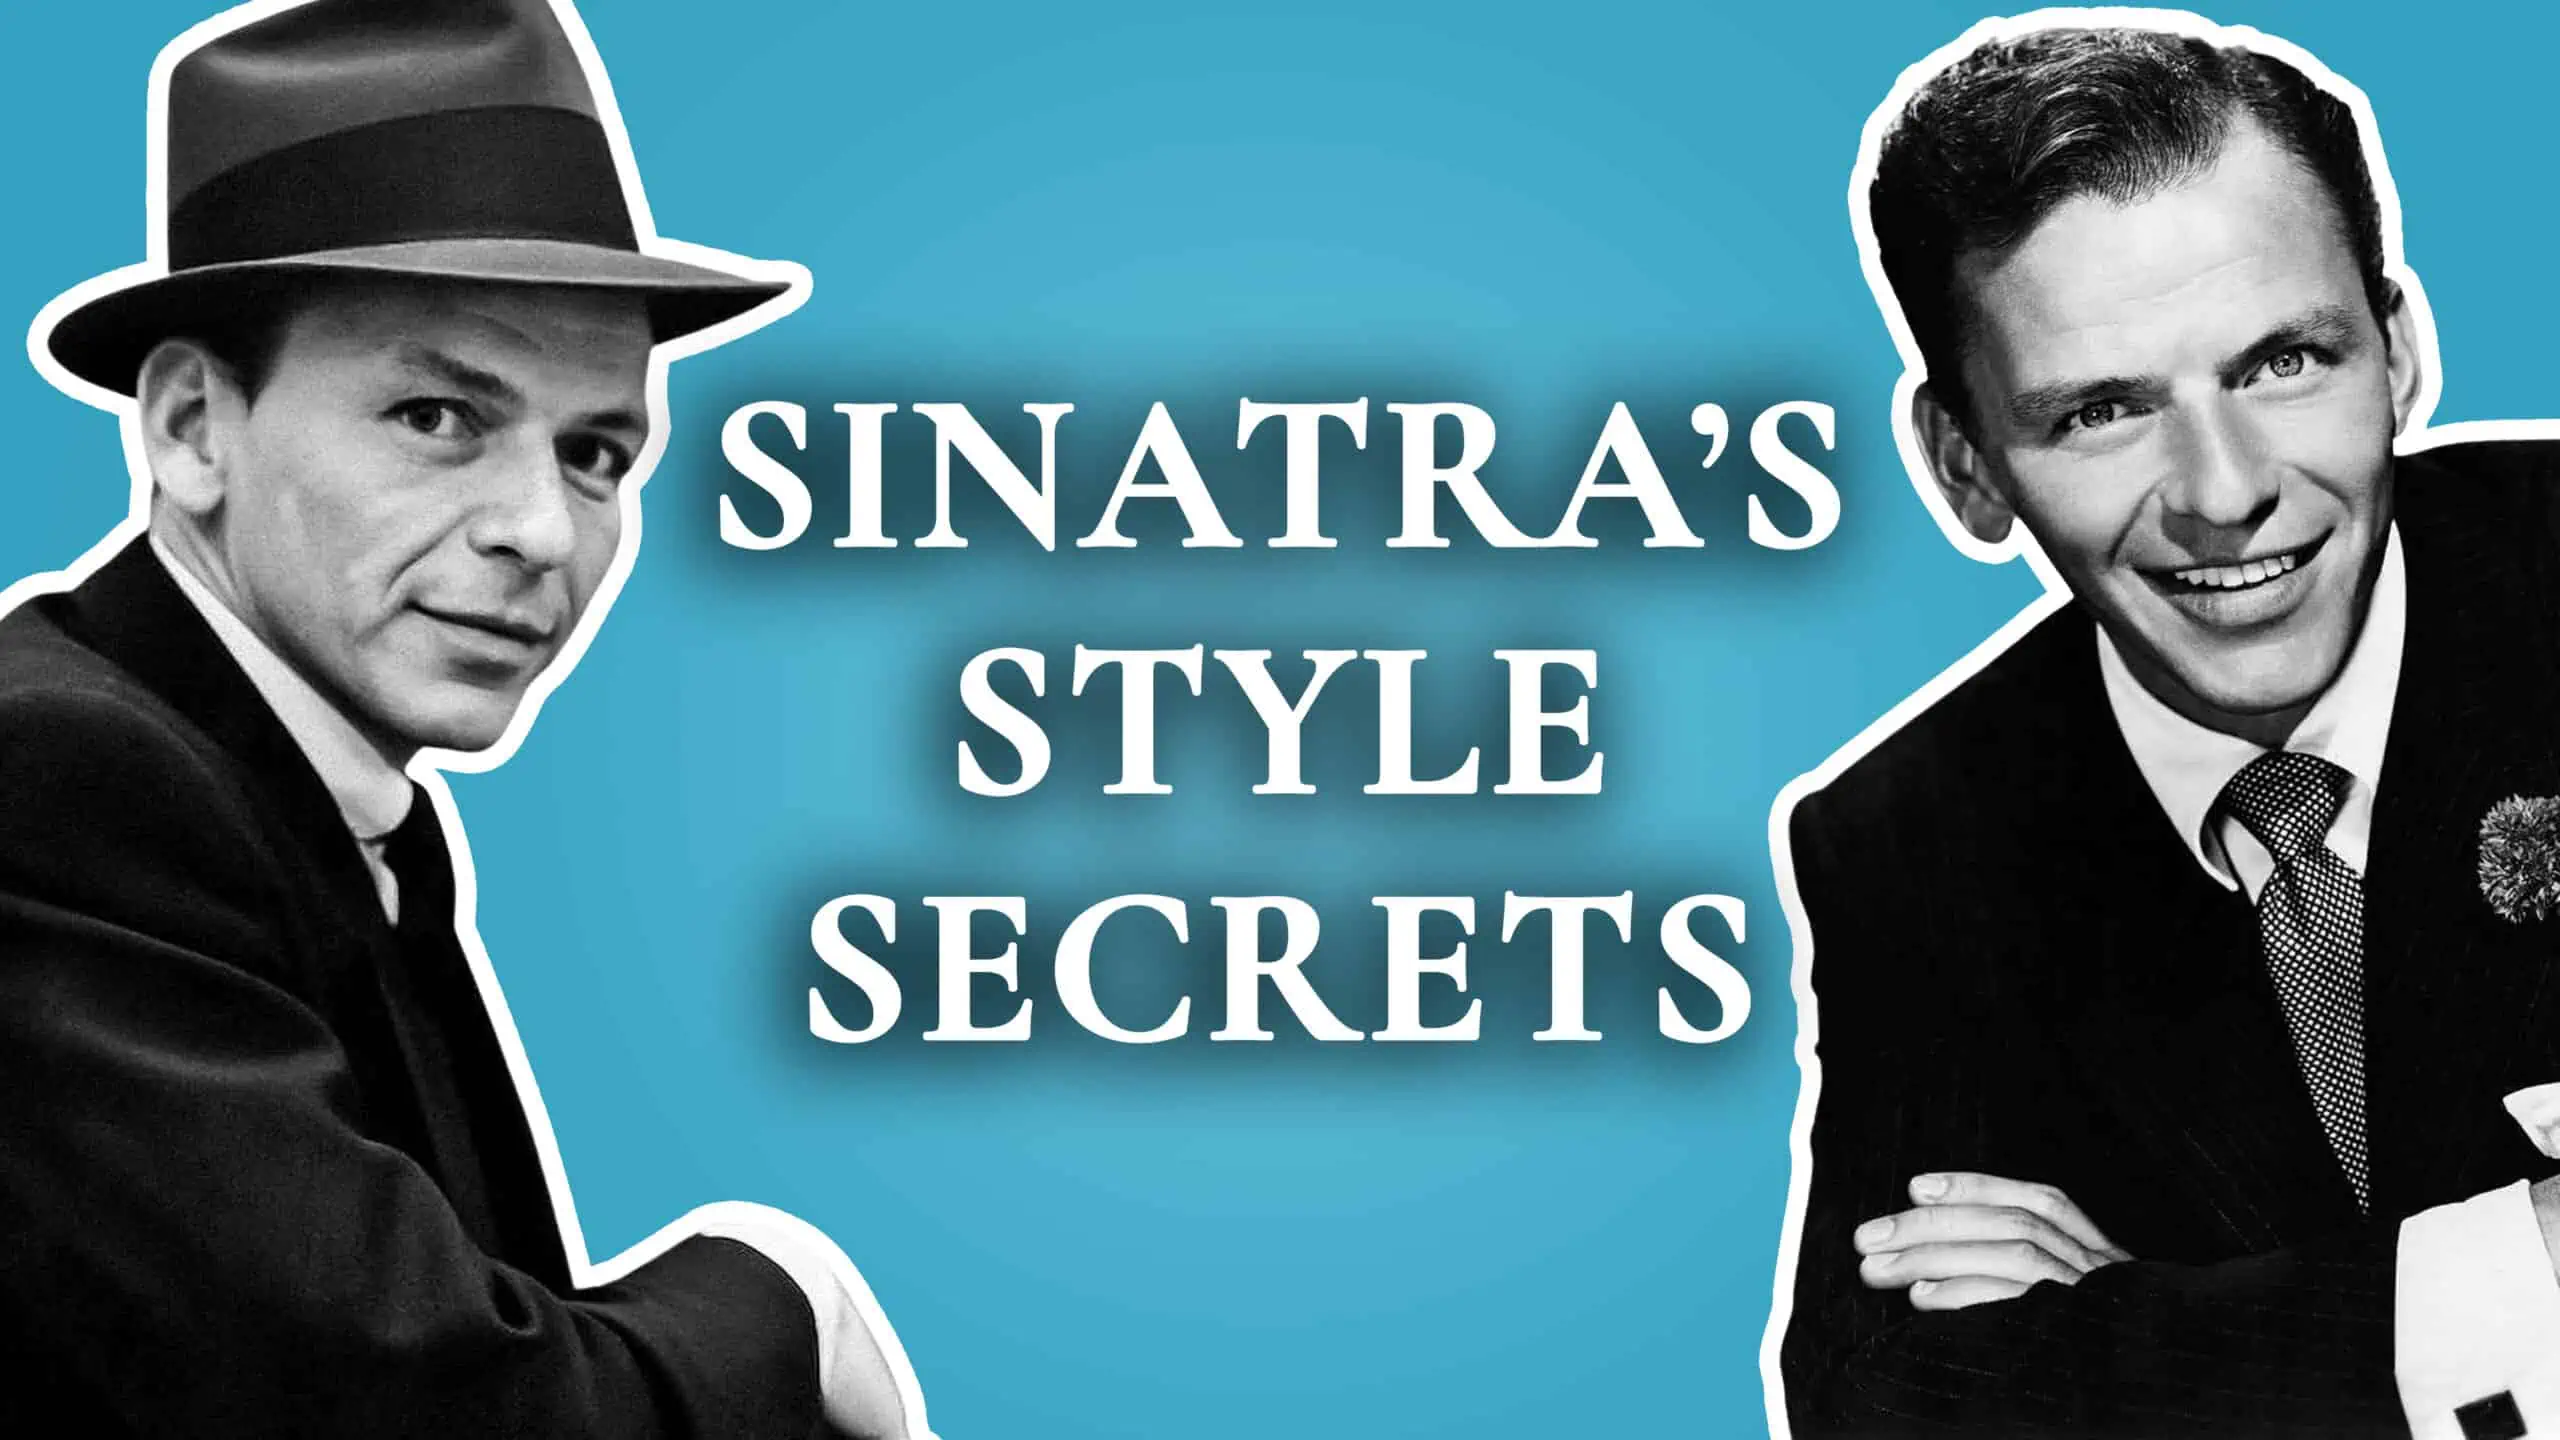 sinatras style secrets 3840x2160 scaled